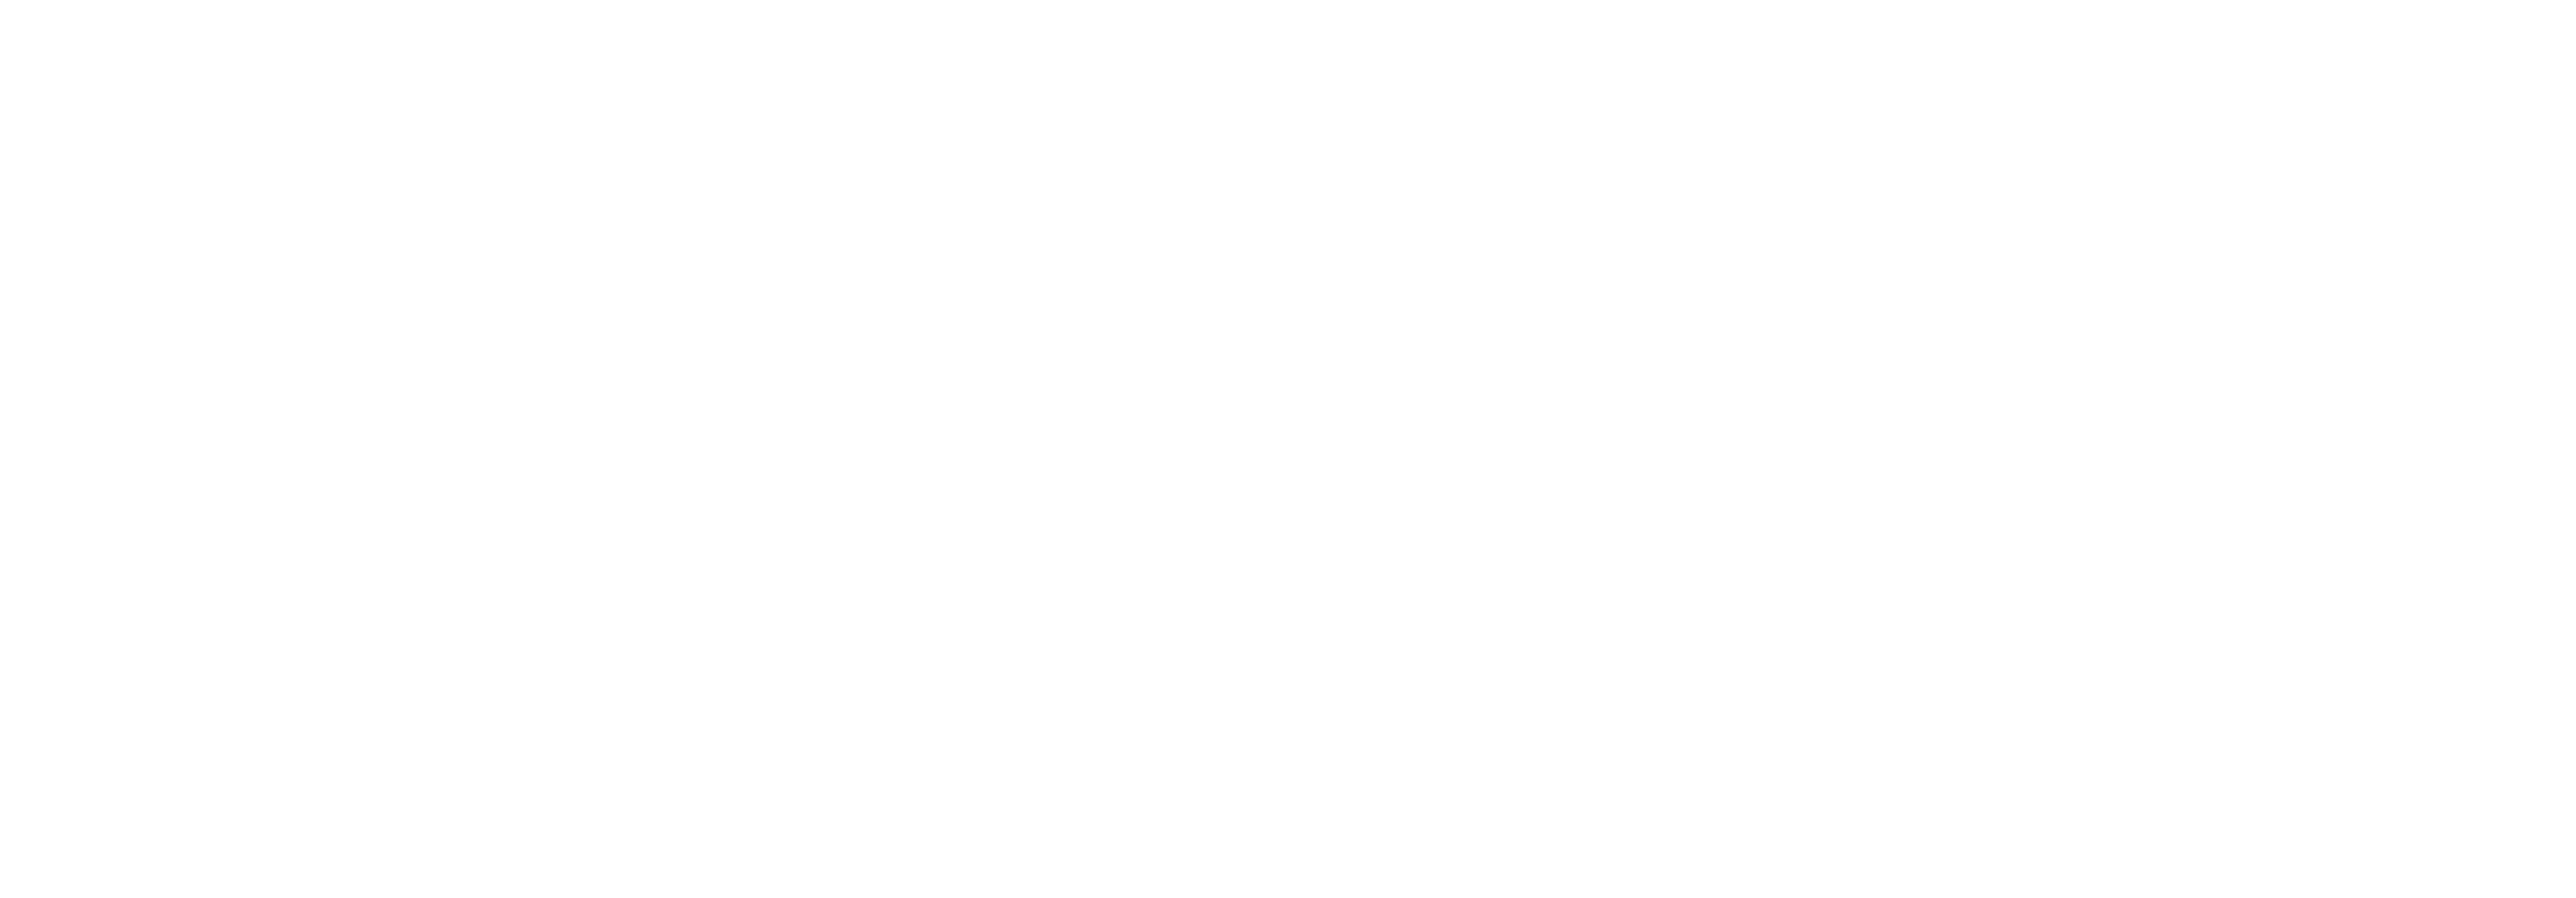 Fast & Furious Presents: Hobbs & Shaw logo